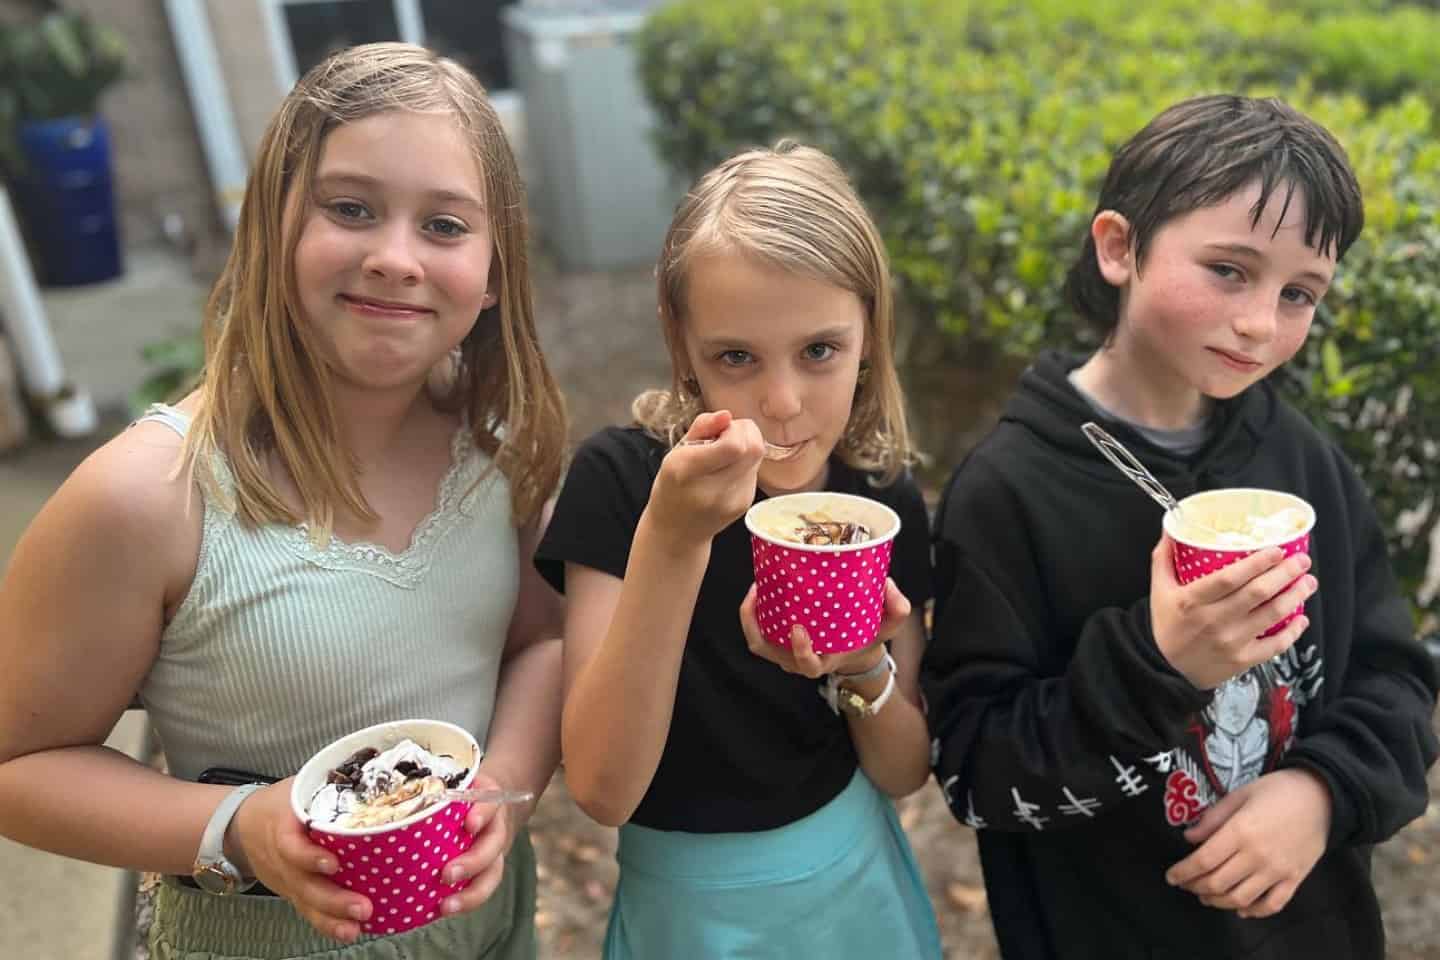 A smiling trio of students enjoy ice cream sundaes outdoors